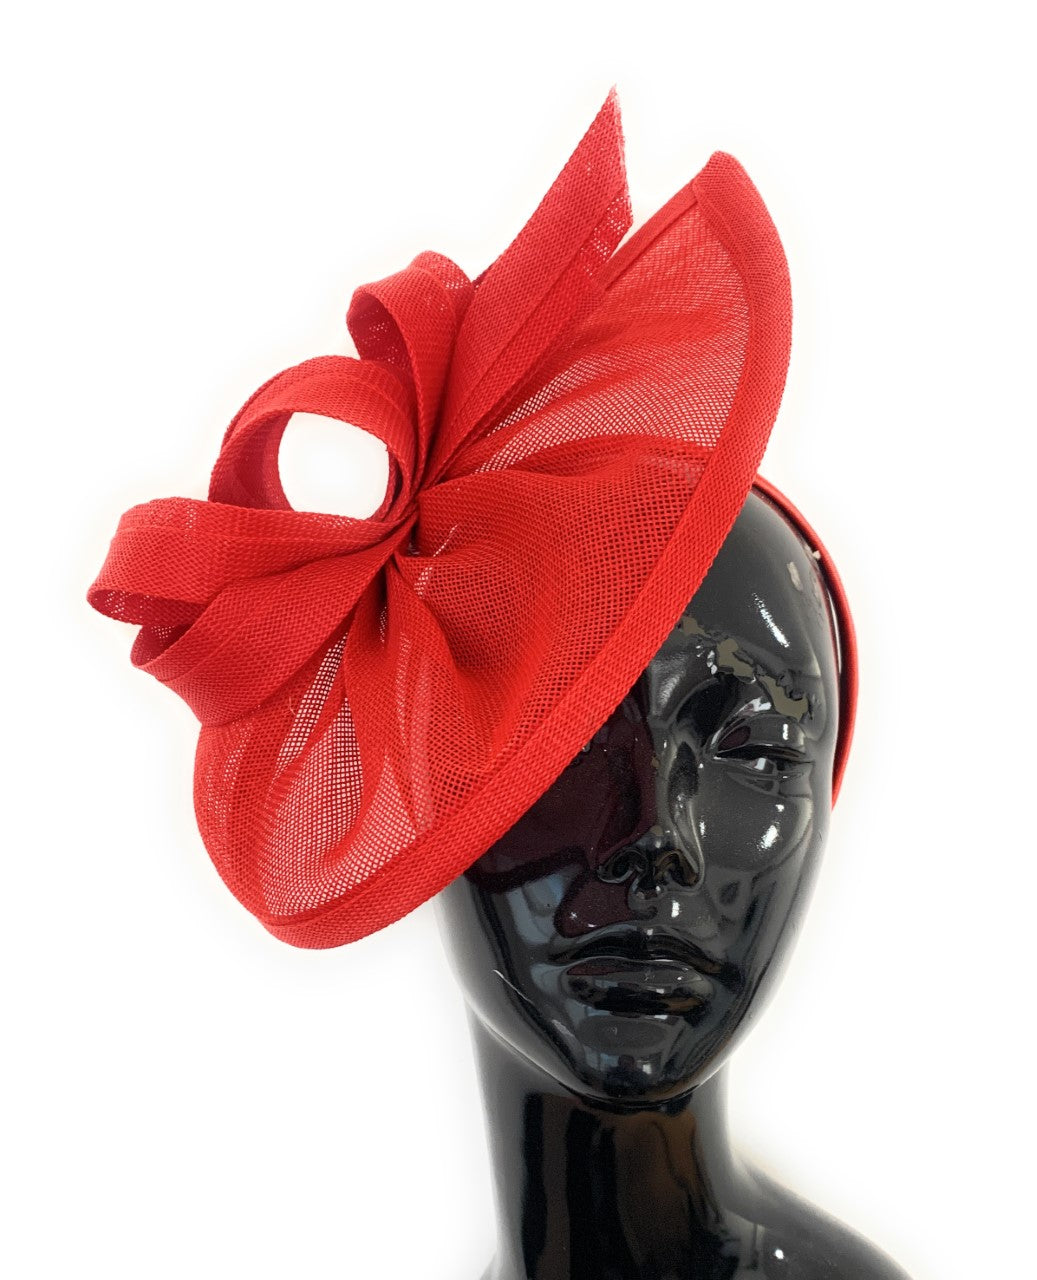 Caprilite Vegan Moon Hoop Fascinator Hat on Headband Wedding Ascot Races Bespoke Sinamay Disc - Red